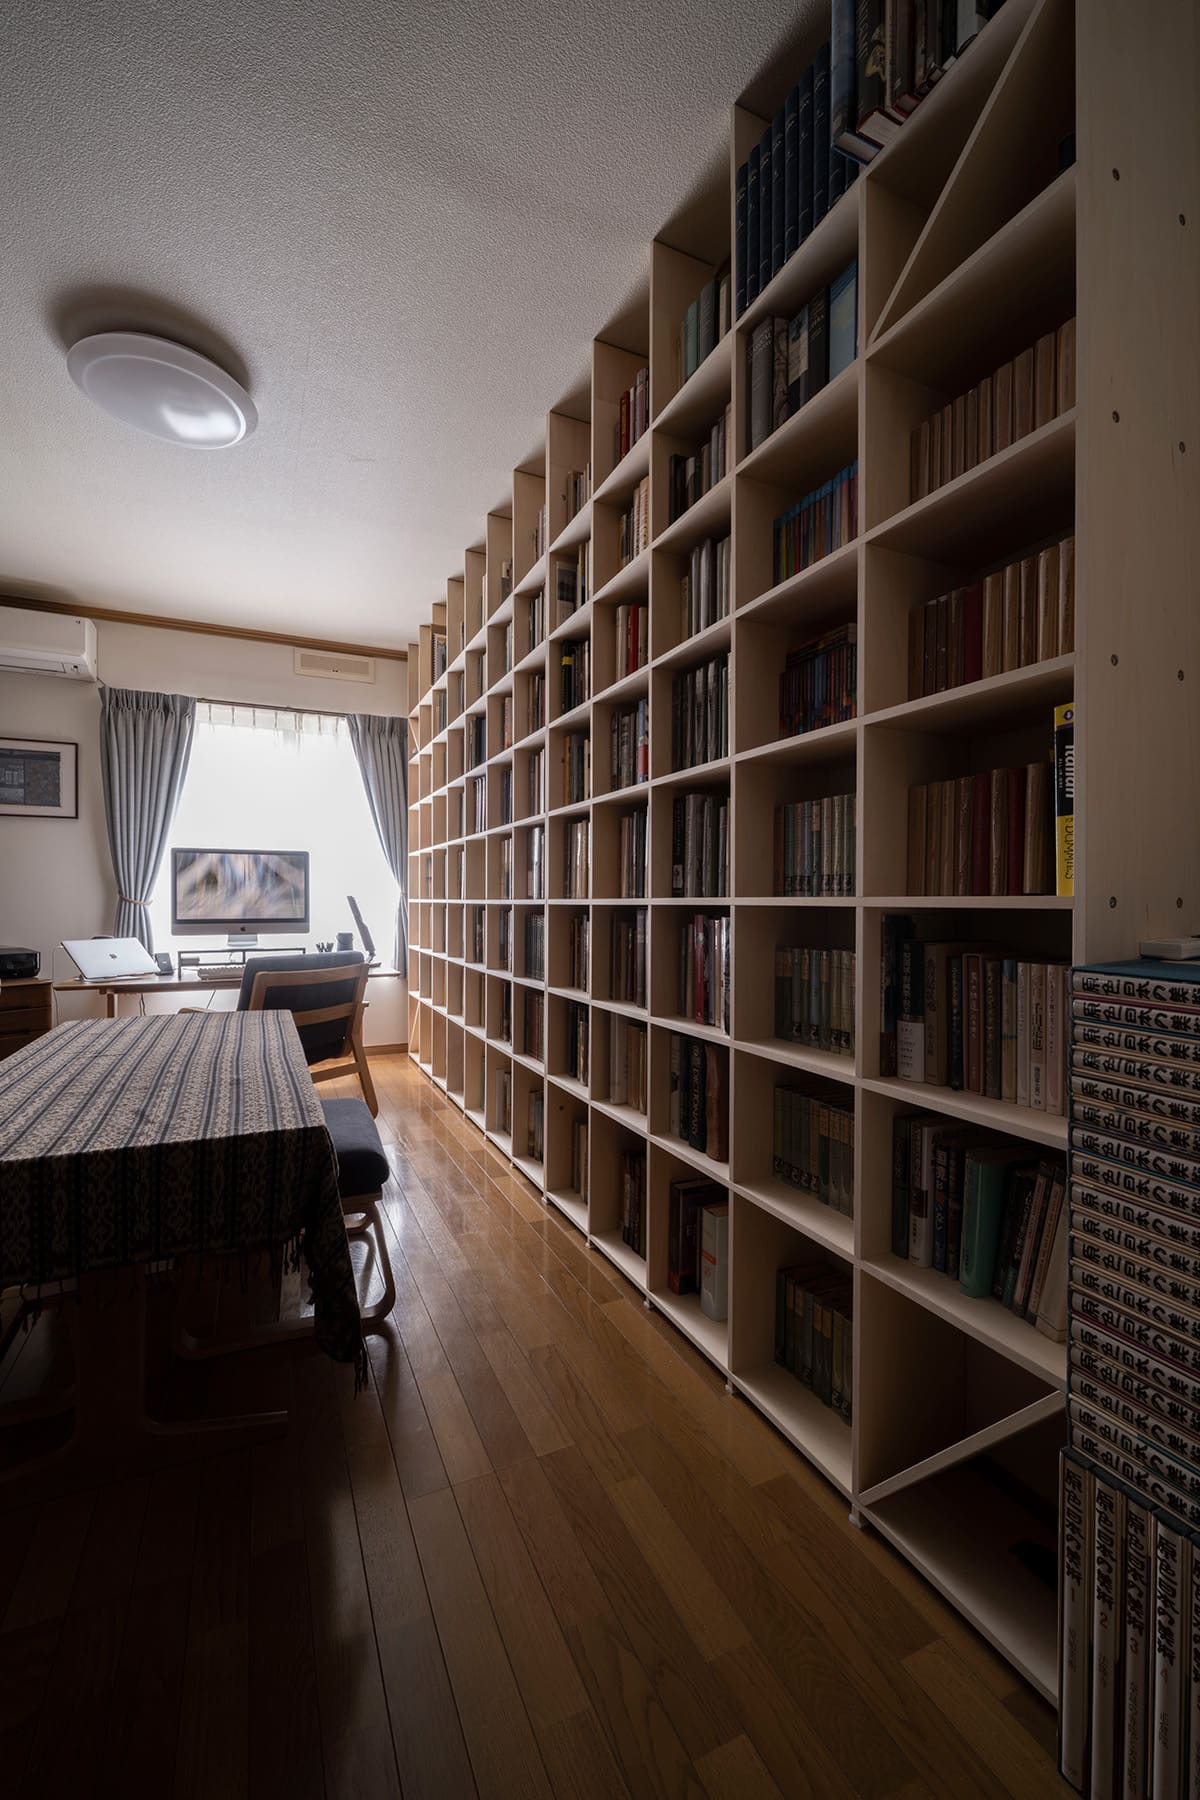 「Shelf 壁一面の本棚 奥行350mm」を部屋の左右に並べ、大量の蔵書をスッキリ綺麗に整理